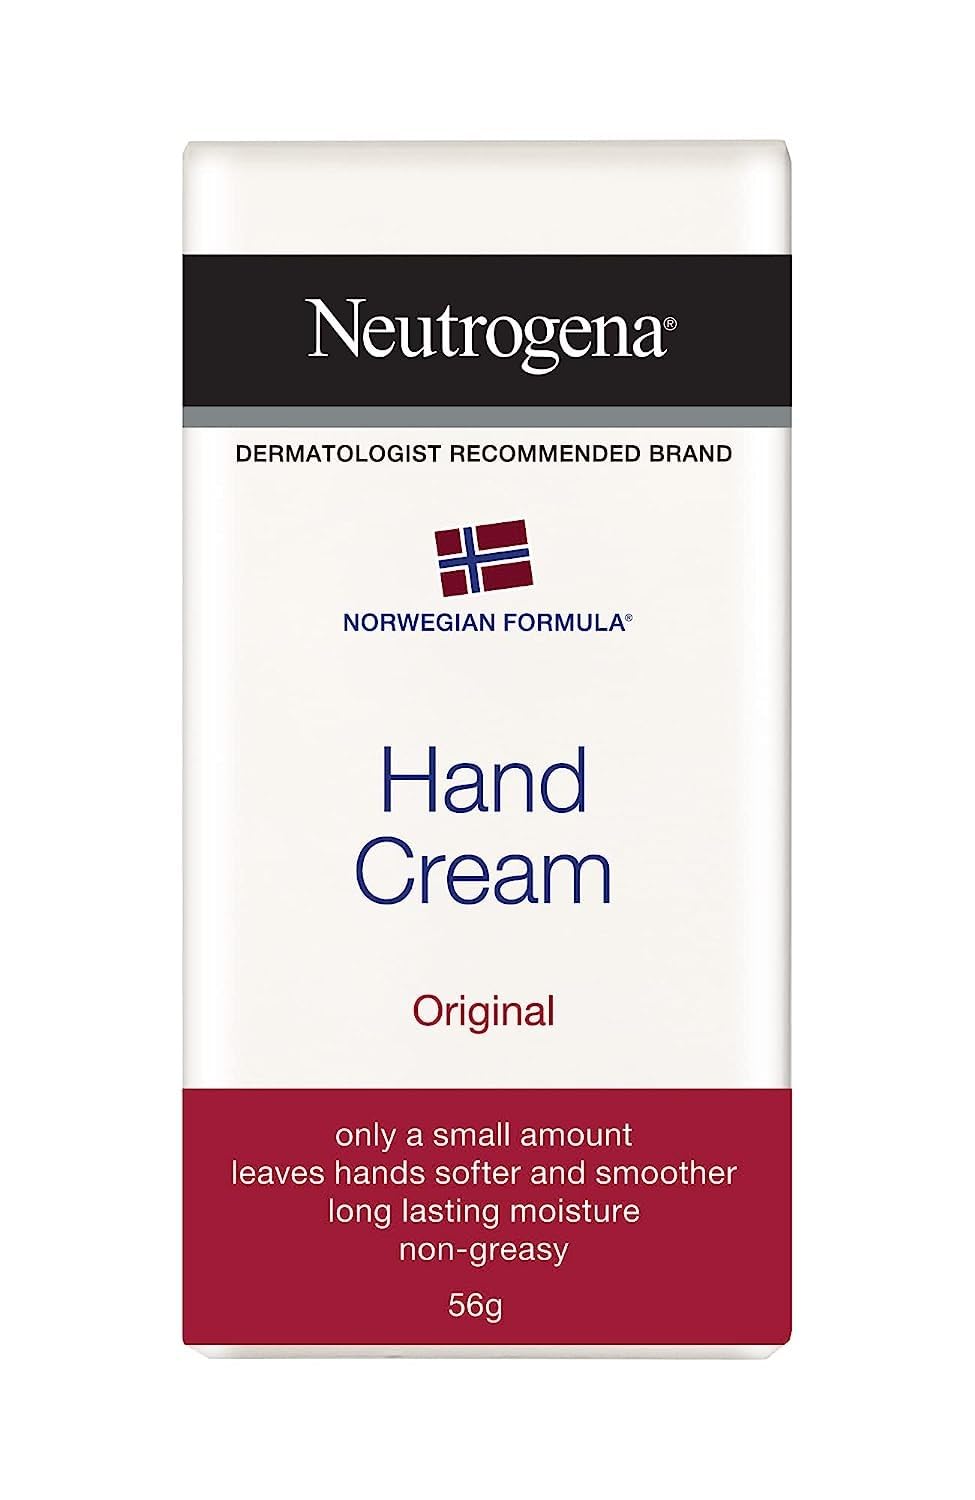 Neutrogena Norwegian Formula Hand Cream FragranceFree, 2 Ounce